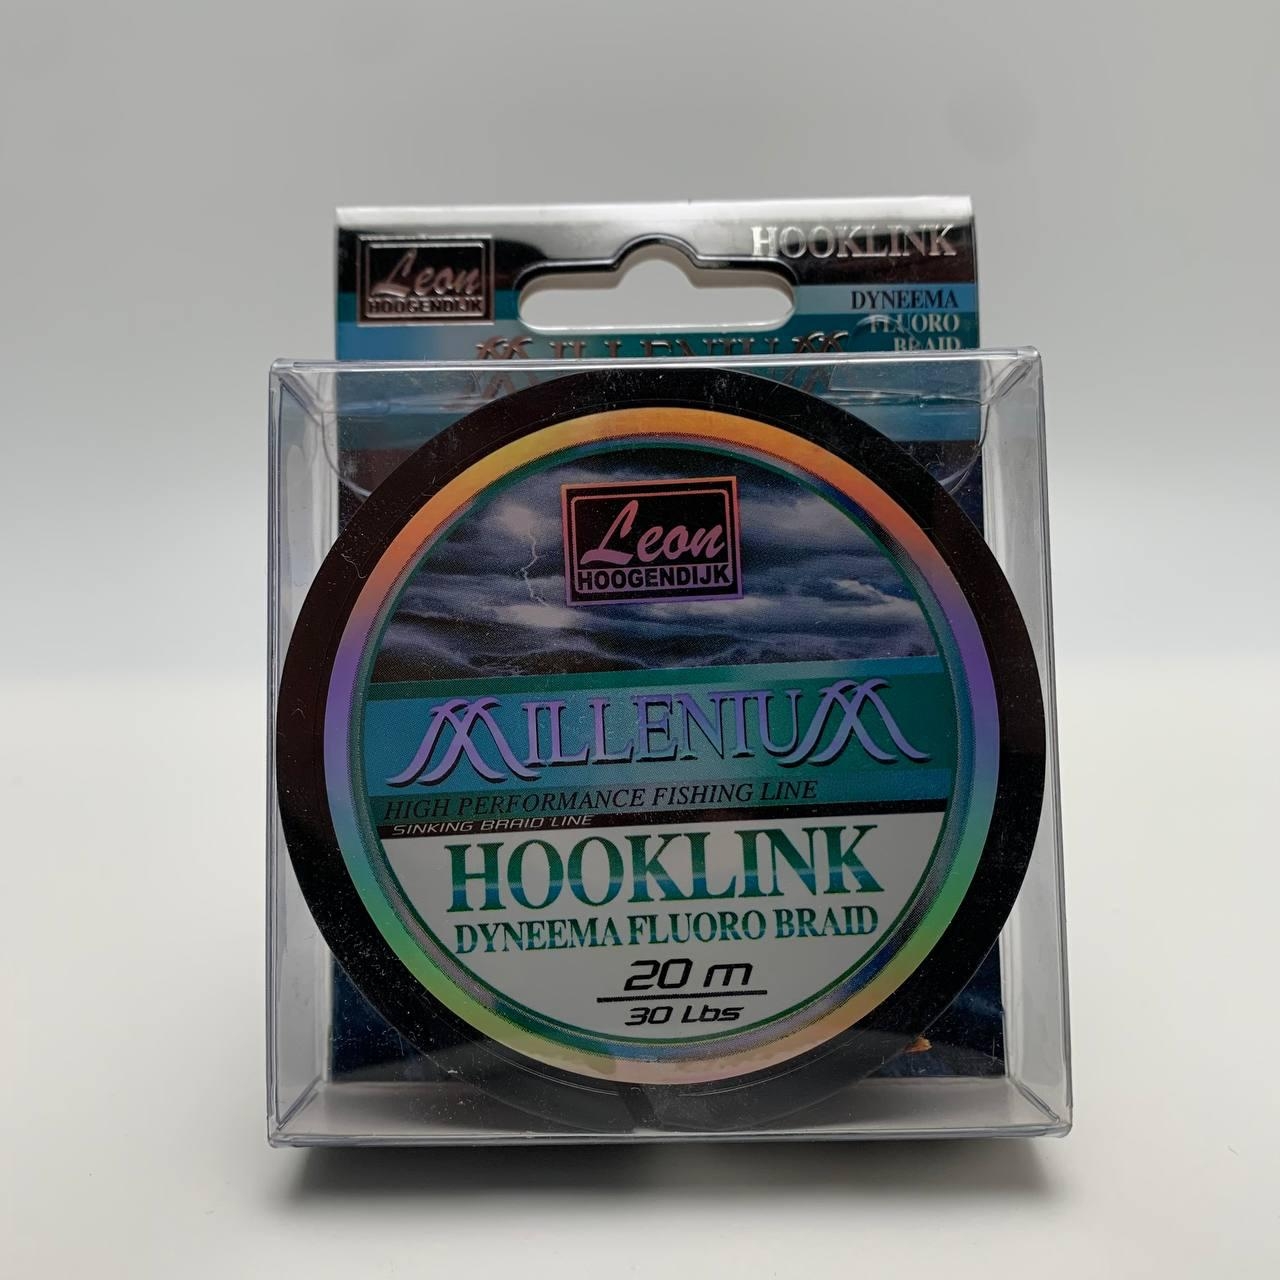 Leon Millennium Hooklink dyneema fluoro braid 20mt  30 lbs